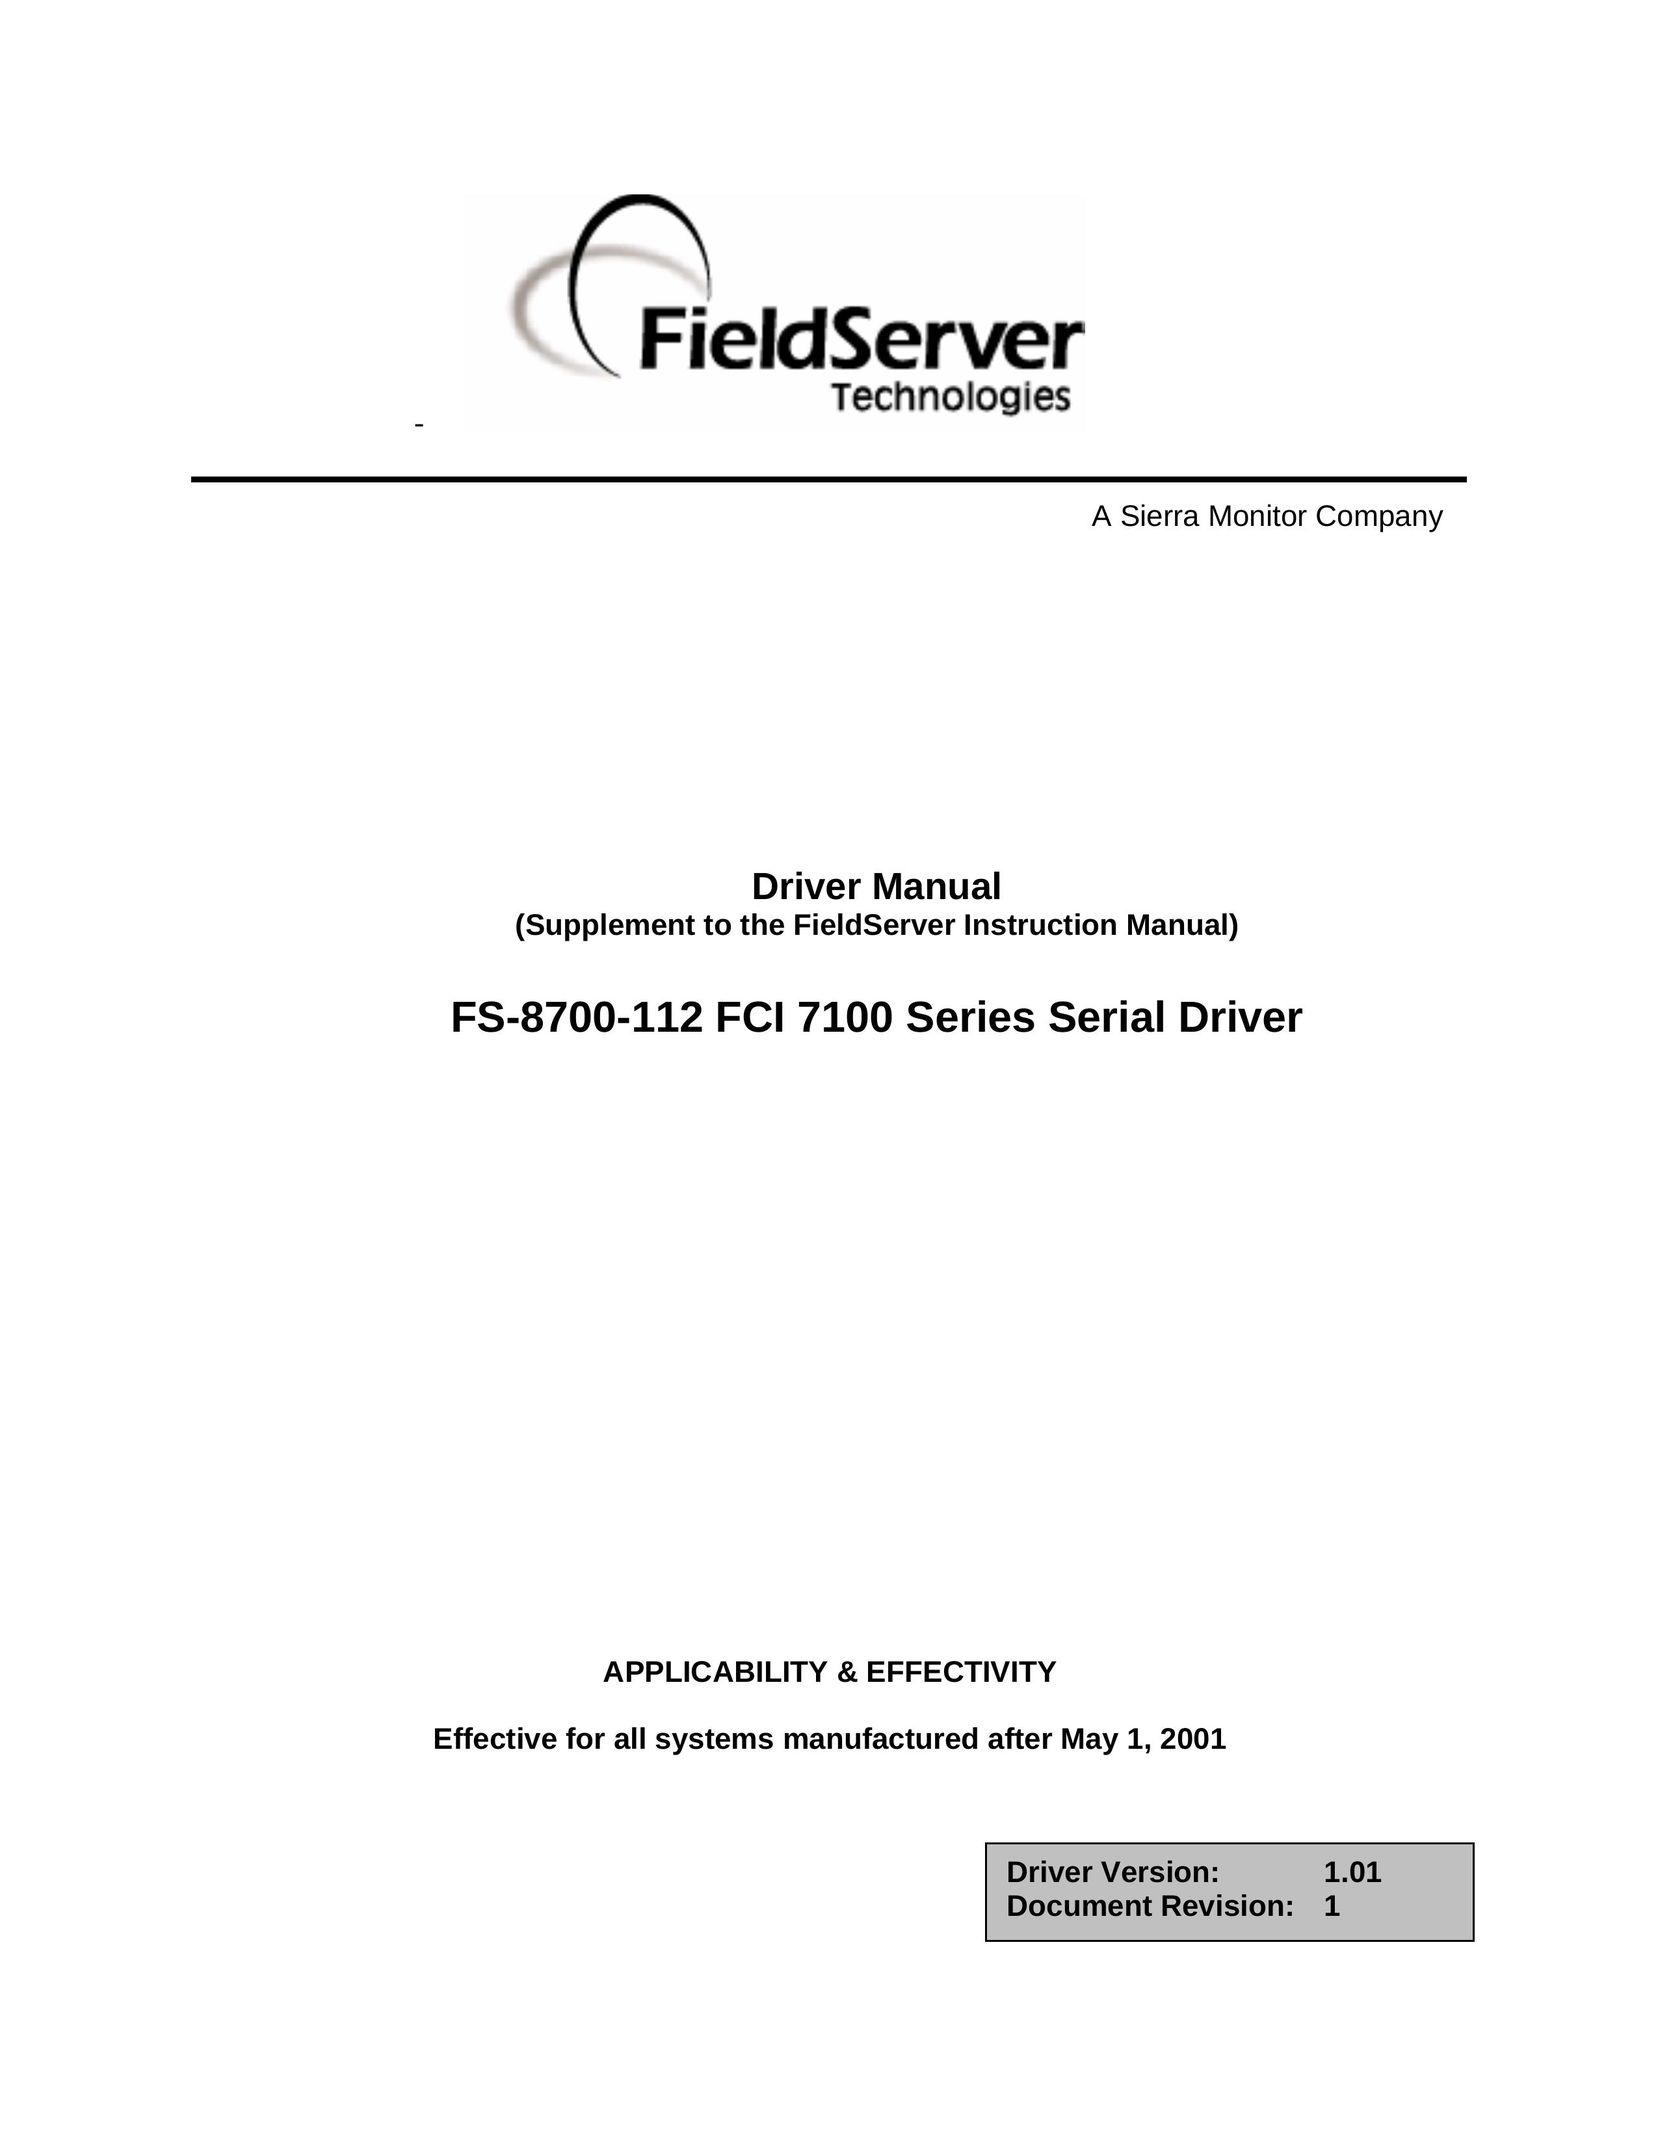 FieldServer FS-8700-112 Computer Drive User Manual